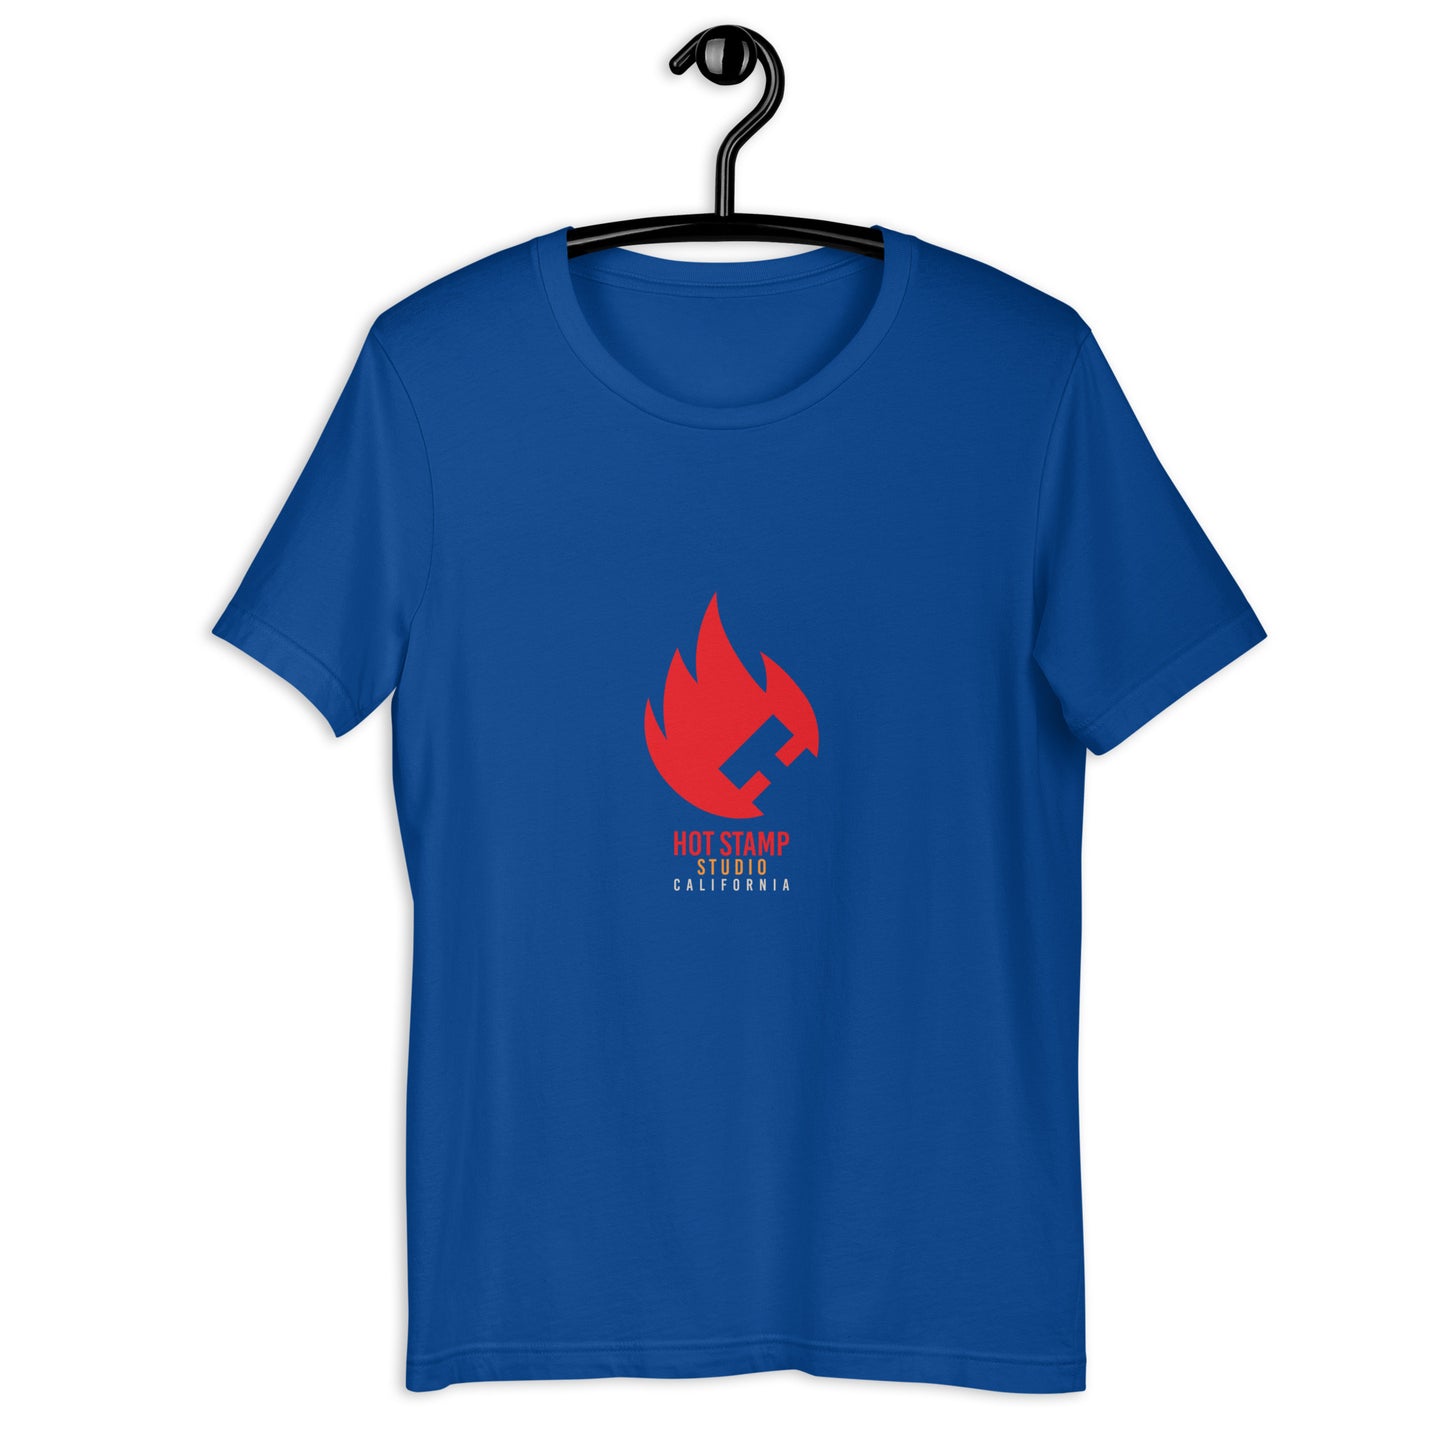 HSS - Hot Stamp Studio Logo Unisex t-shirt